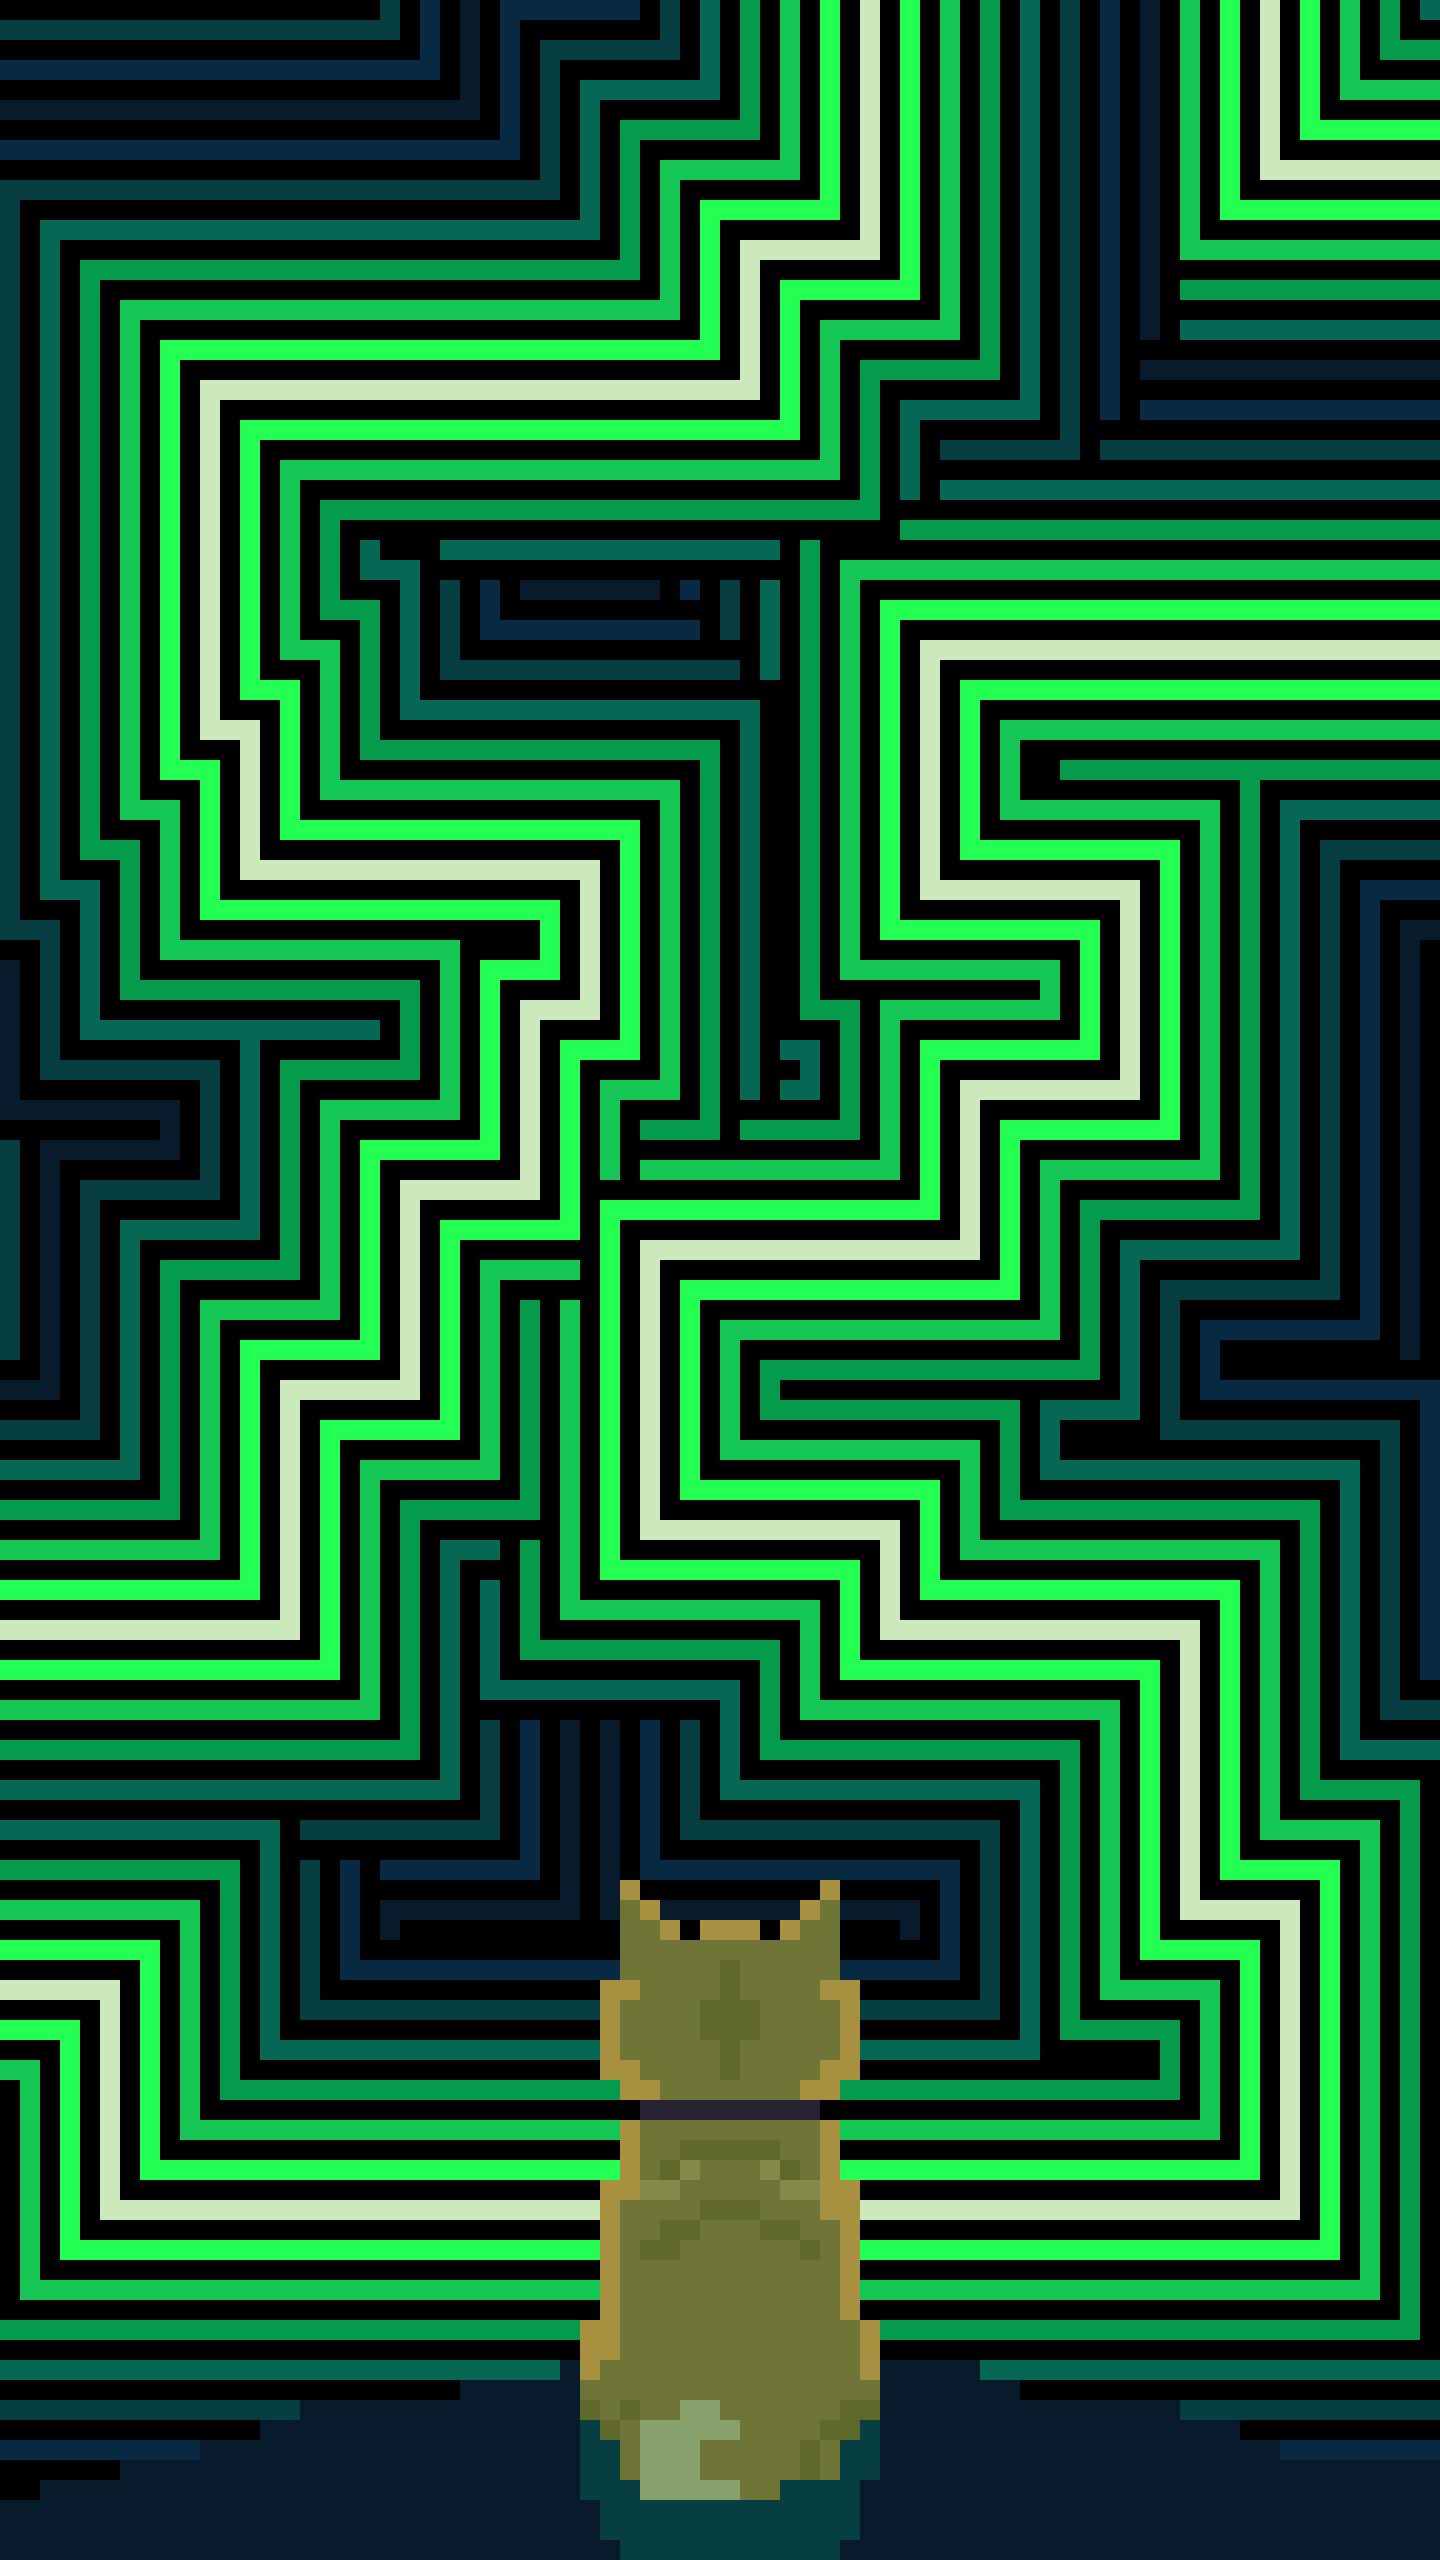 Dreaming Doge #6: 緑の迷路の夢 (Dream of the Green Maze)